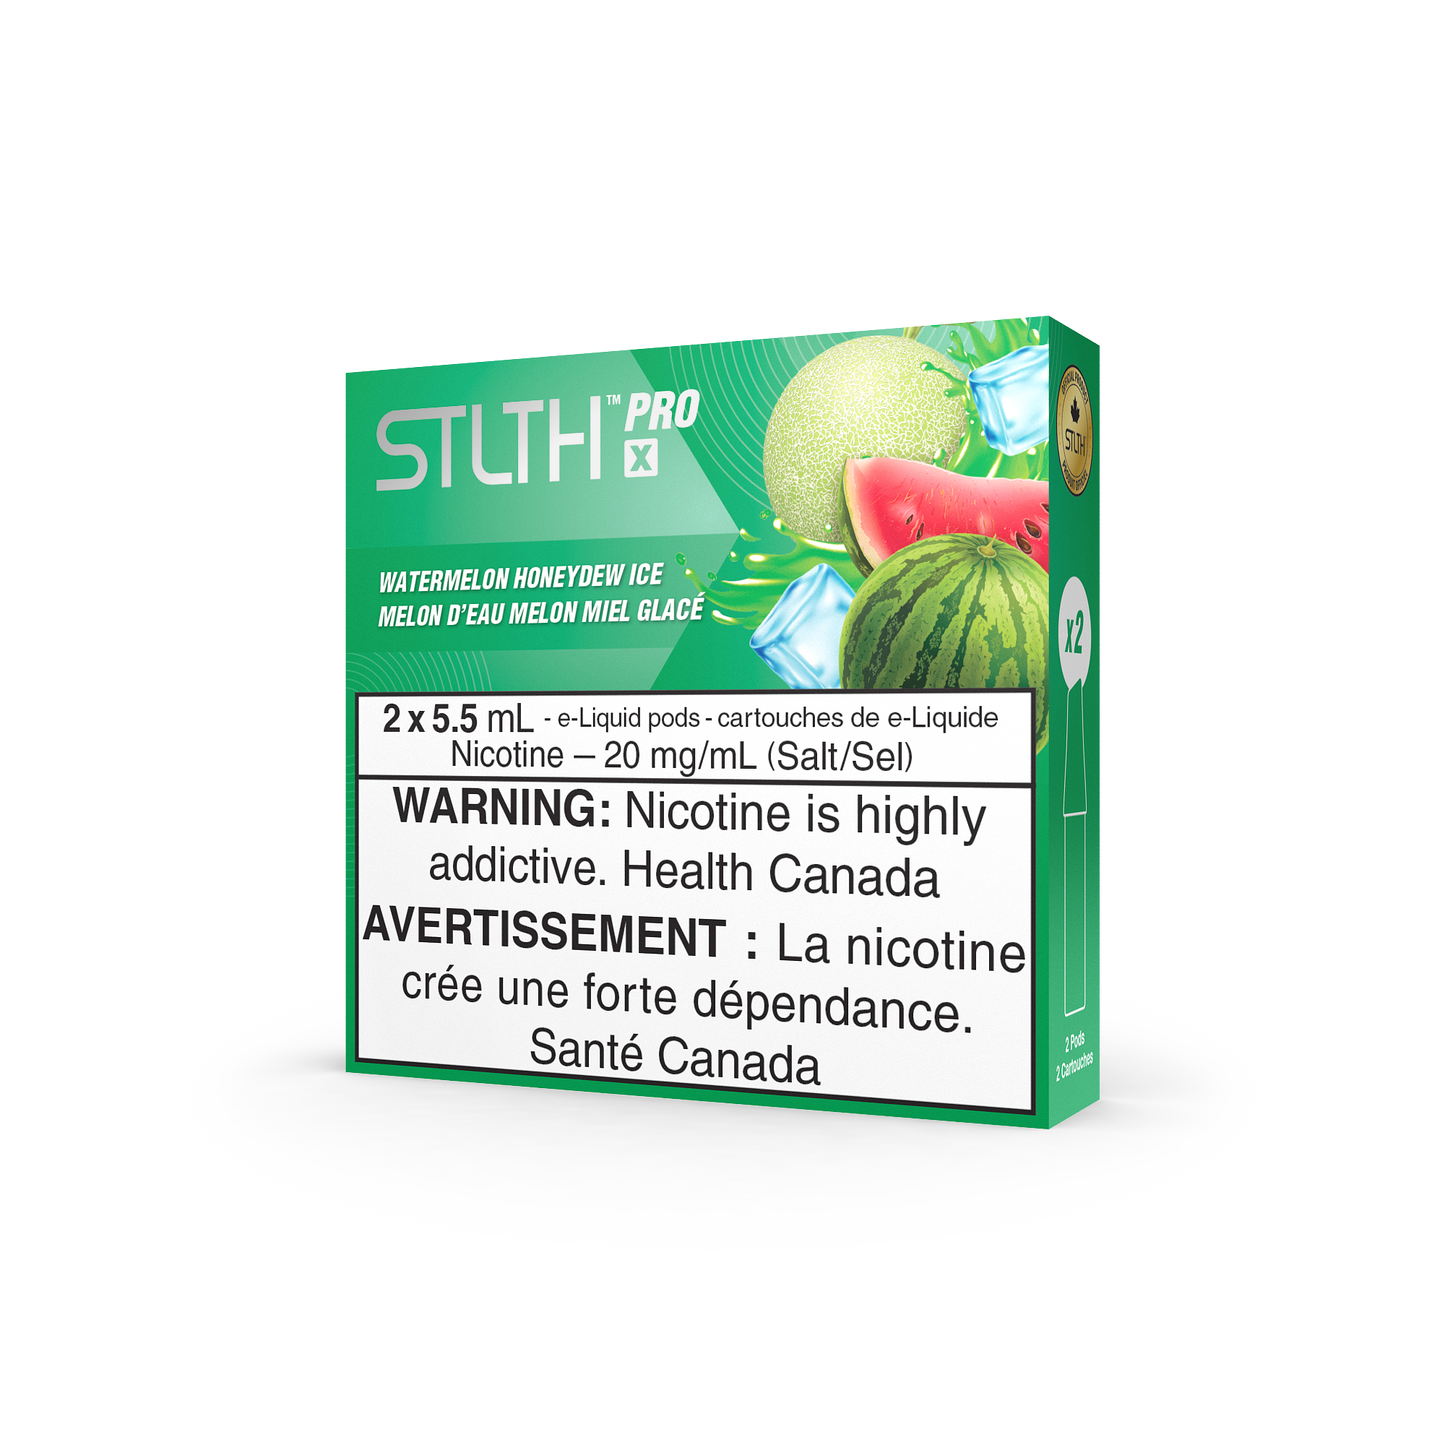 STLTH Pro X - Watermelon Honeydew Ice